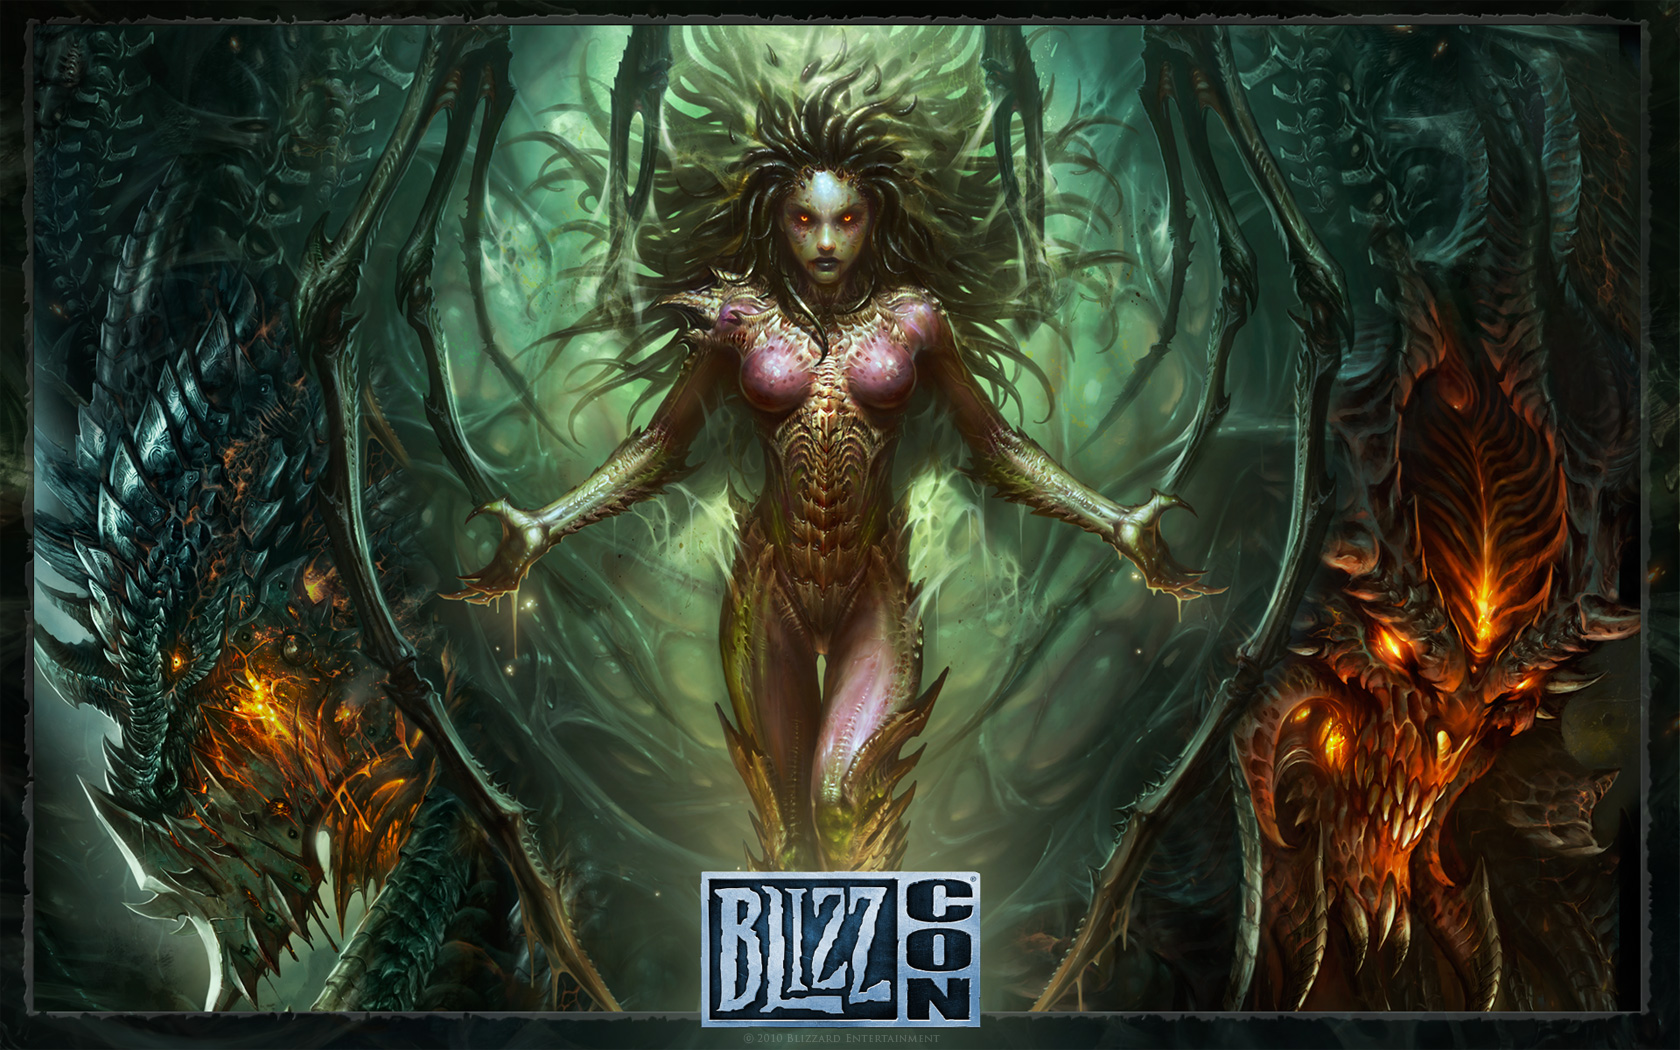 General 1680x1050 Warcraft World of Warcraft video games Kerrigan Deathwing Diablo BlizzCon Starcraft II StarCraft video game art Video Game Creatures